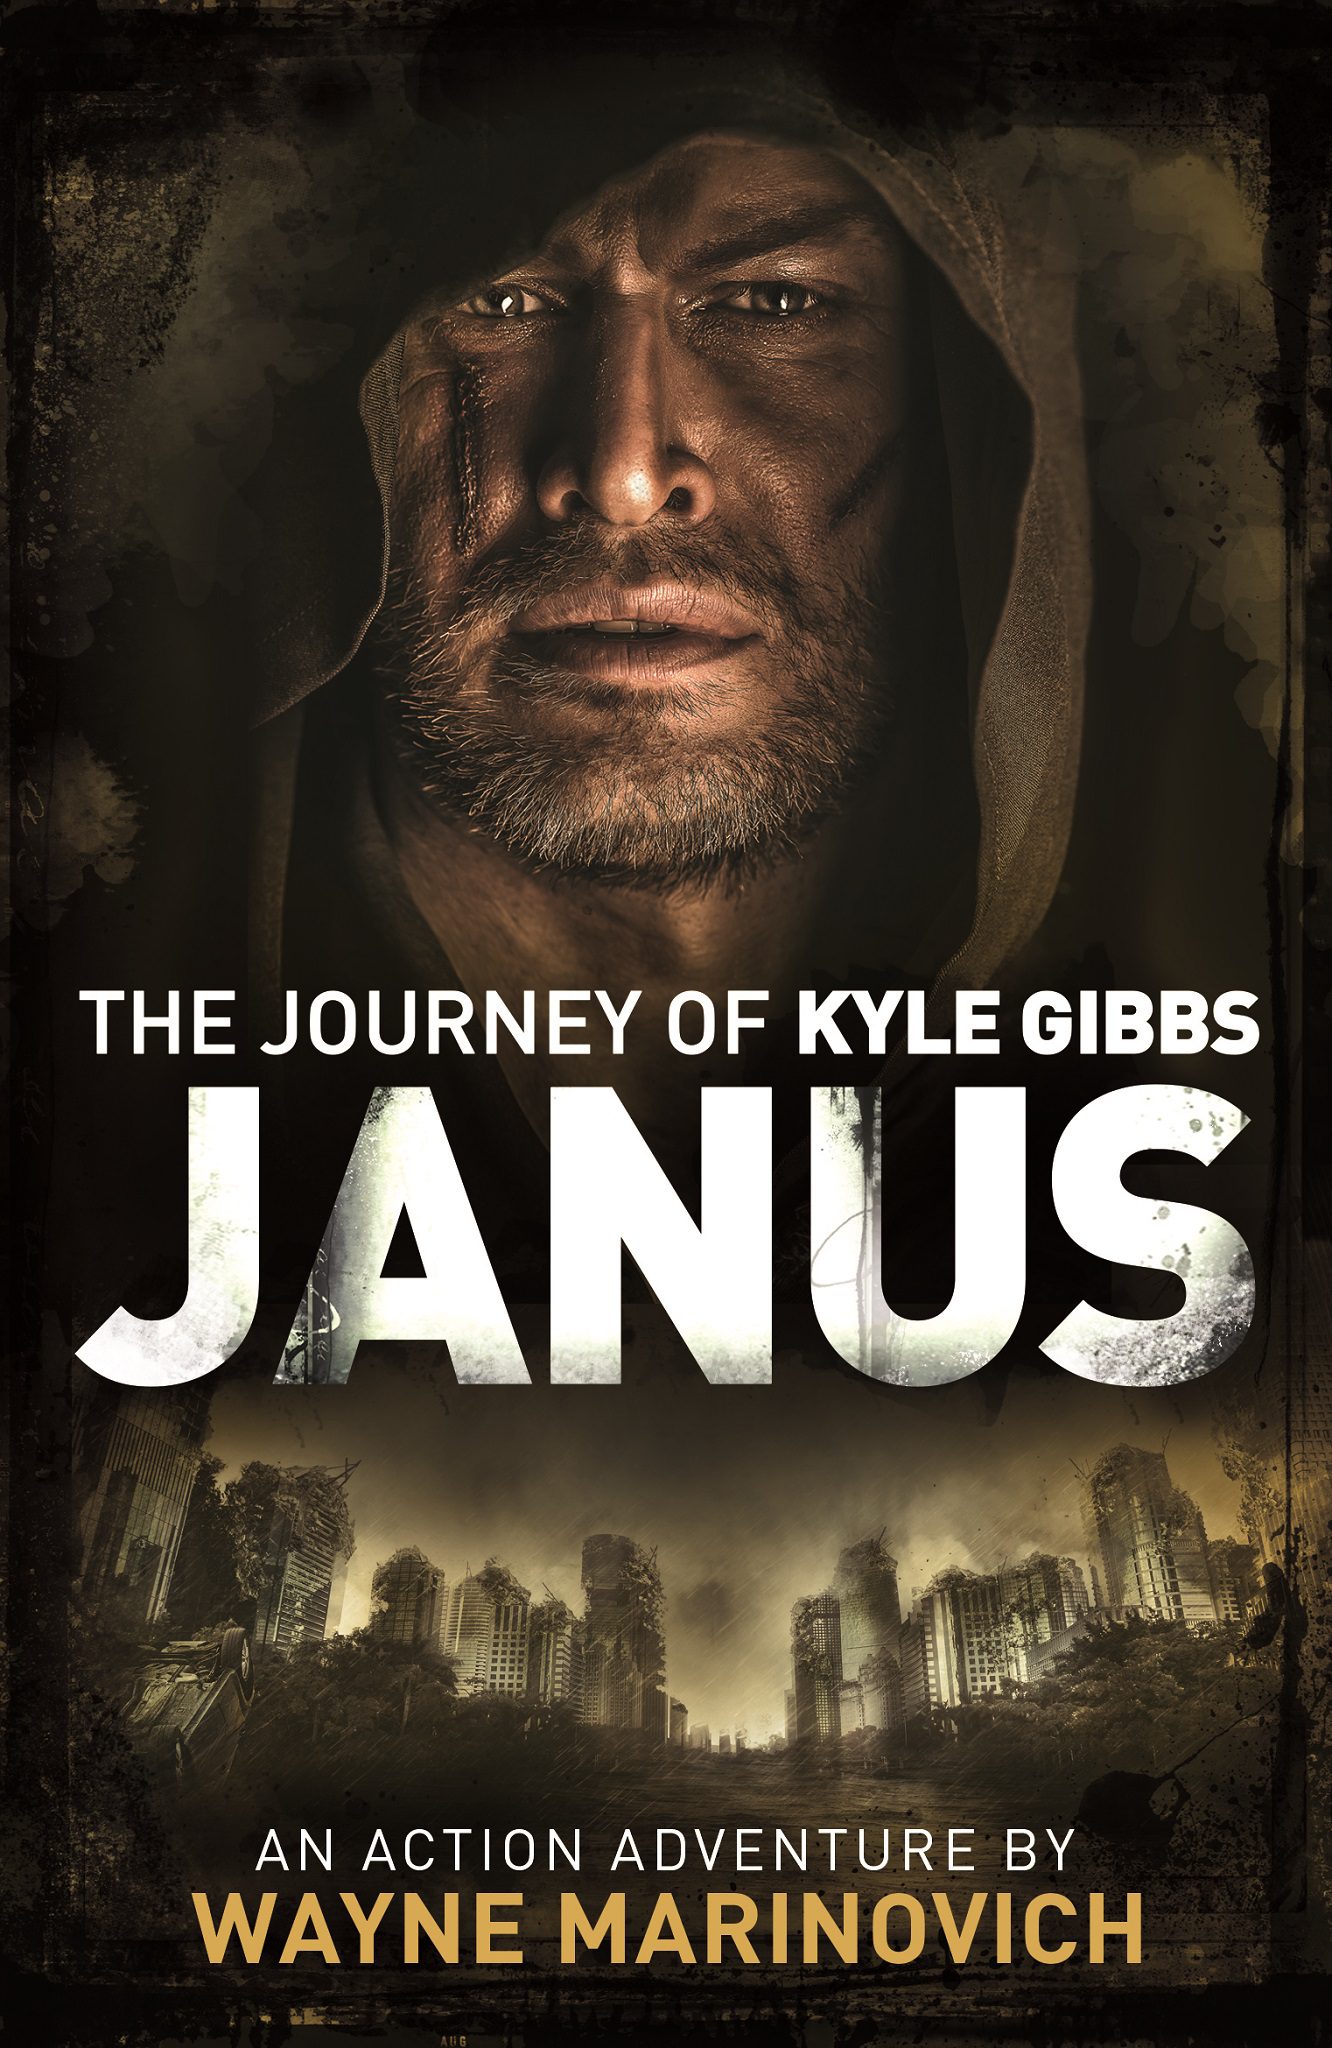 "Janus - The journey of Kyle Gibbs by Wayne Marinovich"